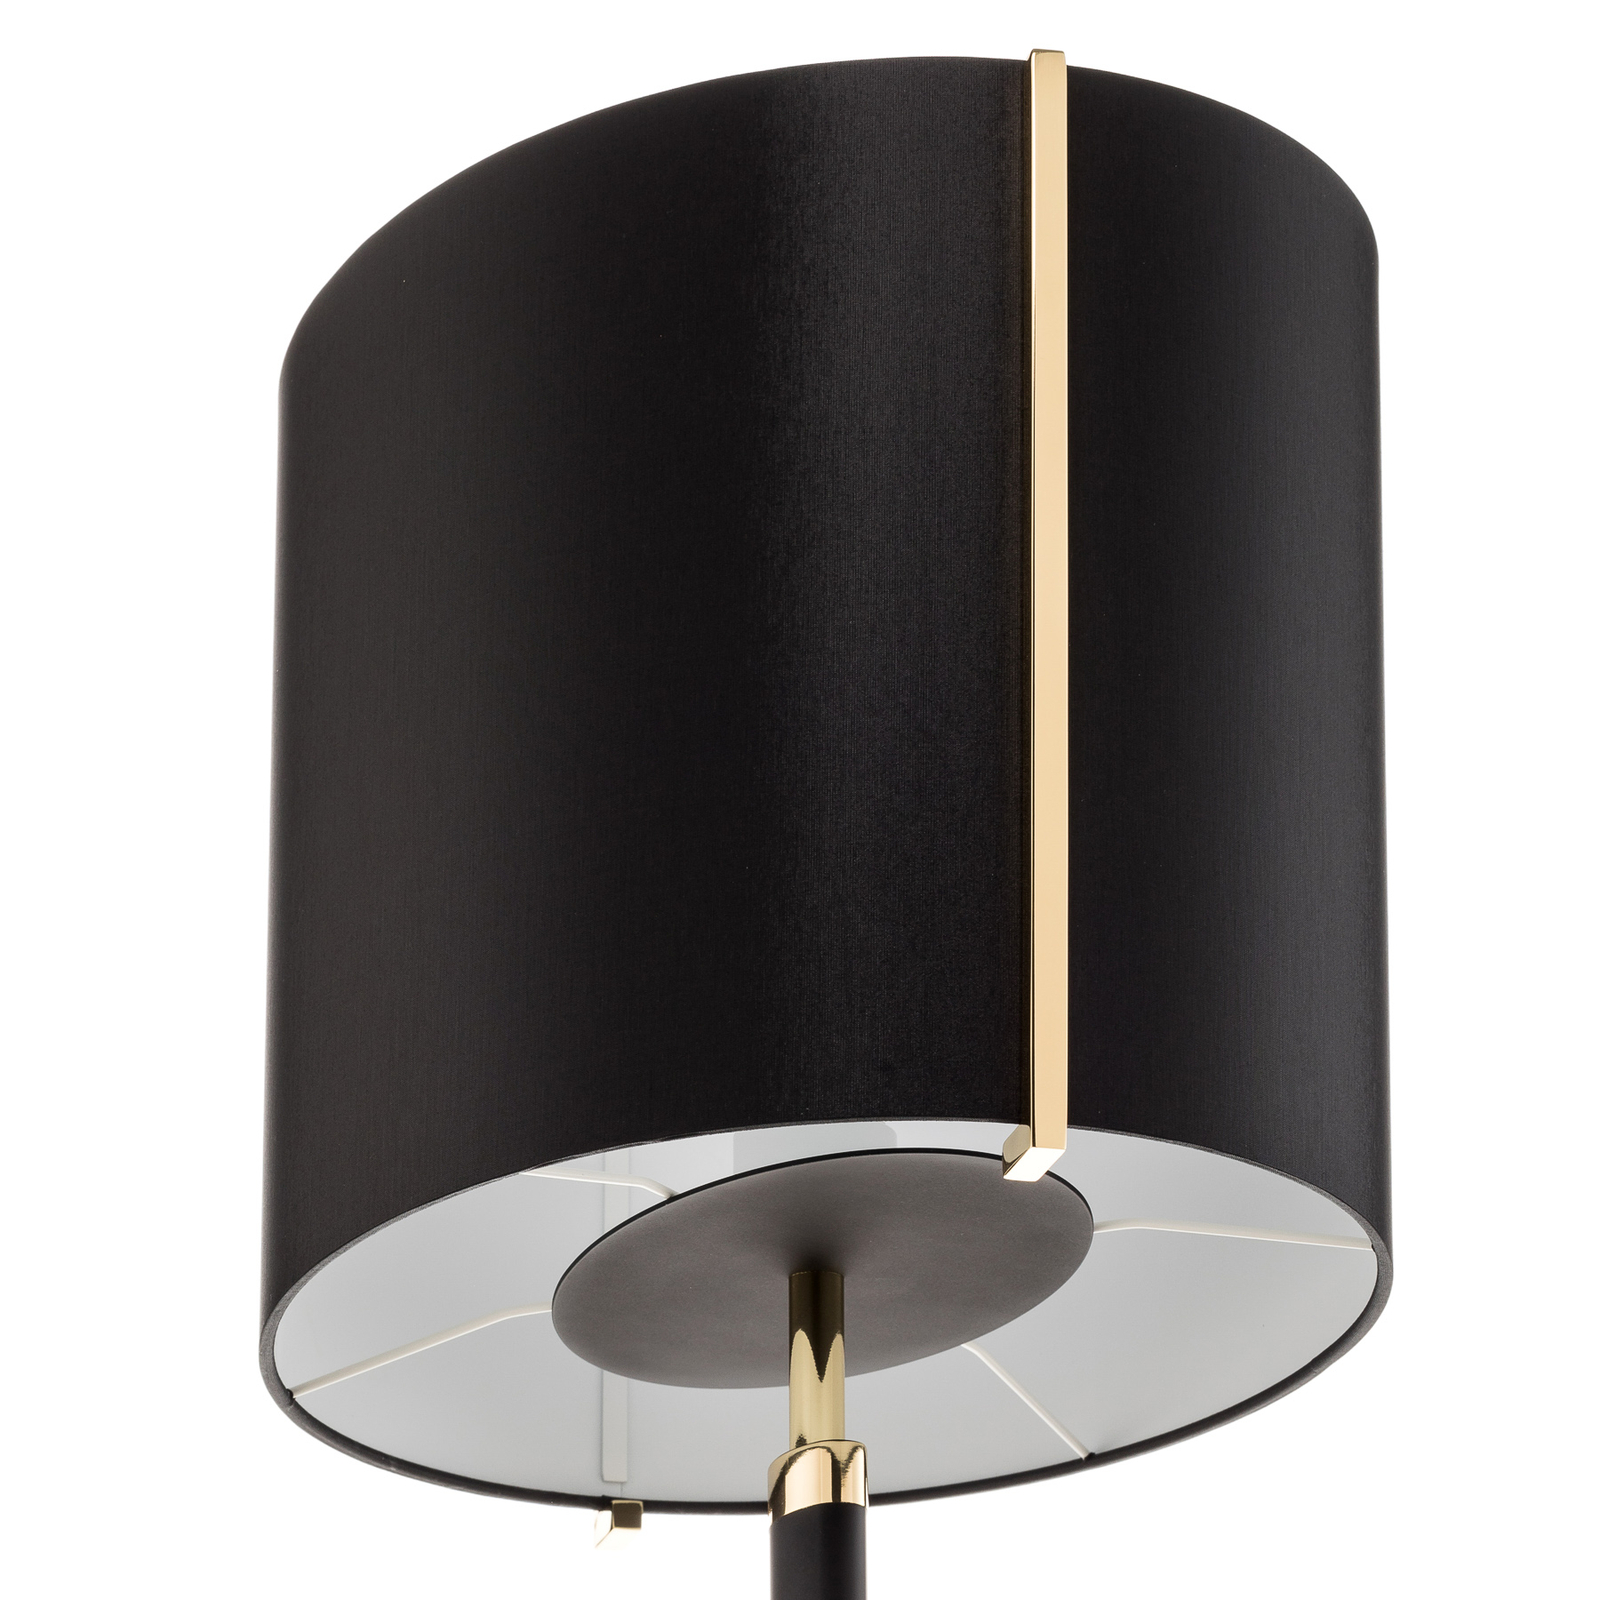 Rothfels Darrell floor lamp, oval, black, brass